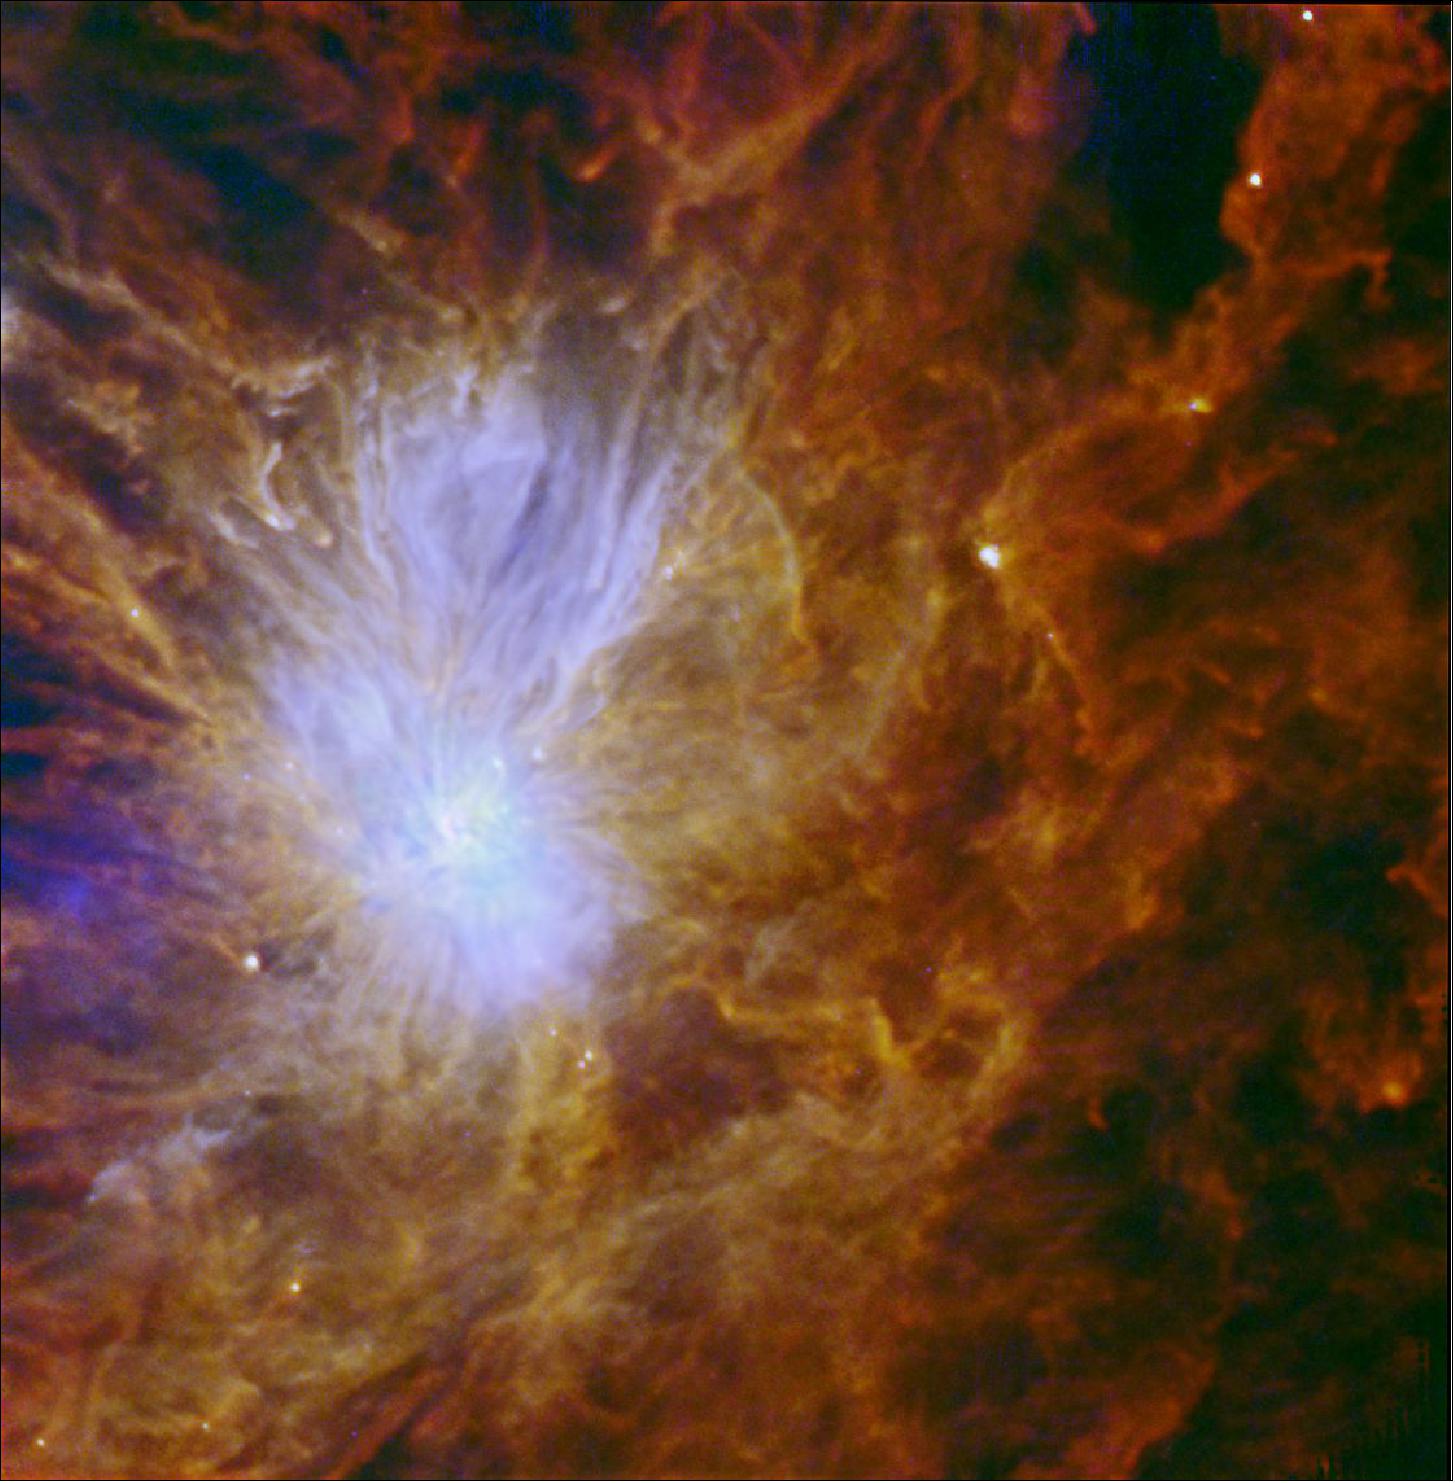 Figure 48: Feathery filaments in Mon R2 (image credit: ESA/Herschel/PACS/SPIRE/HOBYS Key Program consortium)